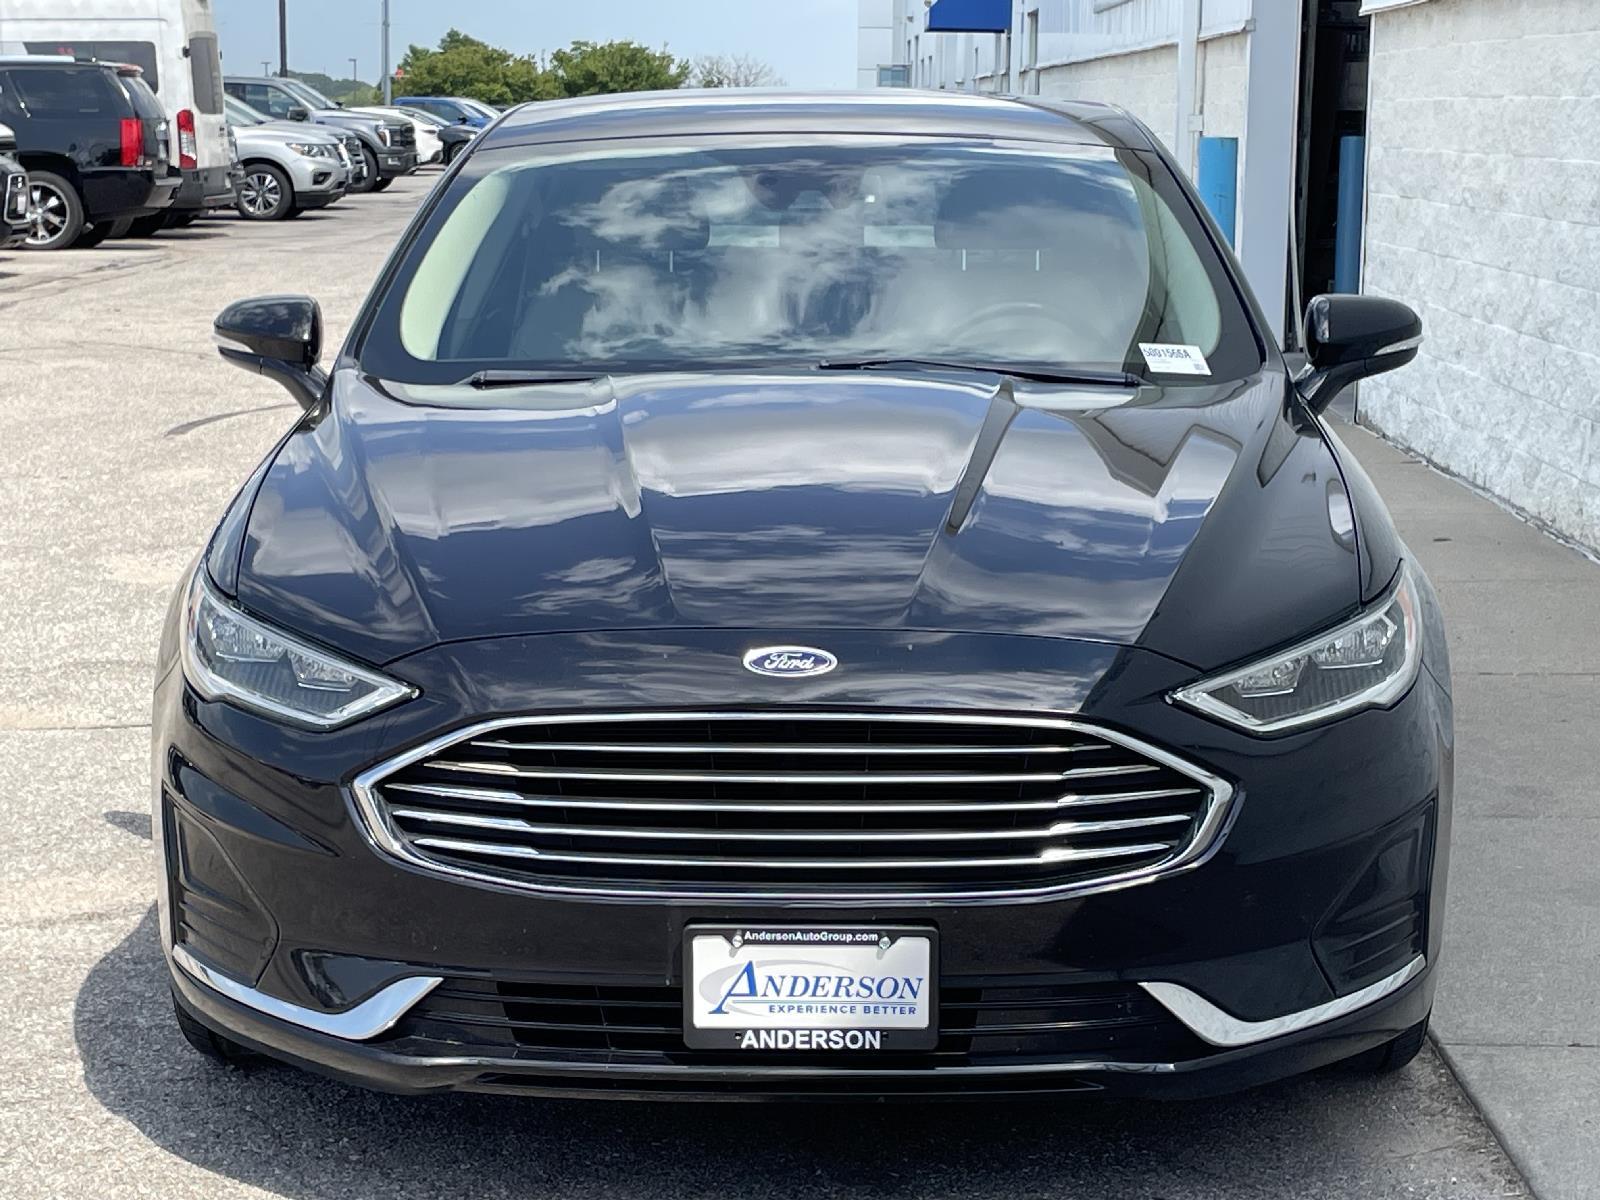 Used 2019 Ford Fusion SEL Sedan for sale in Lincoln NE